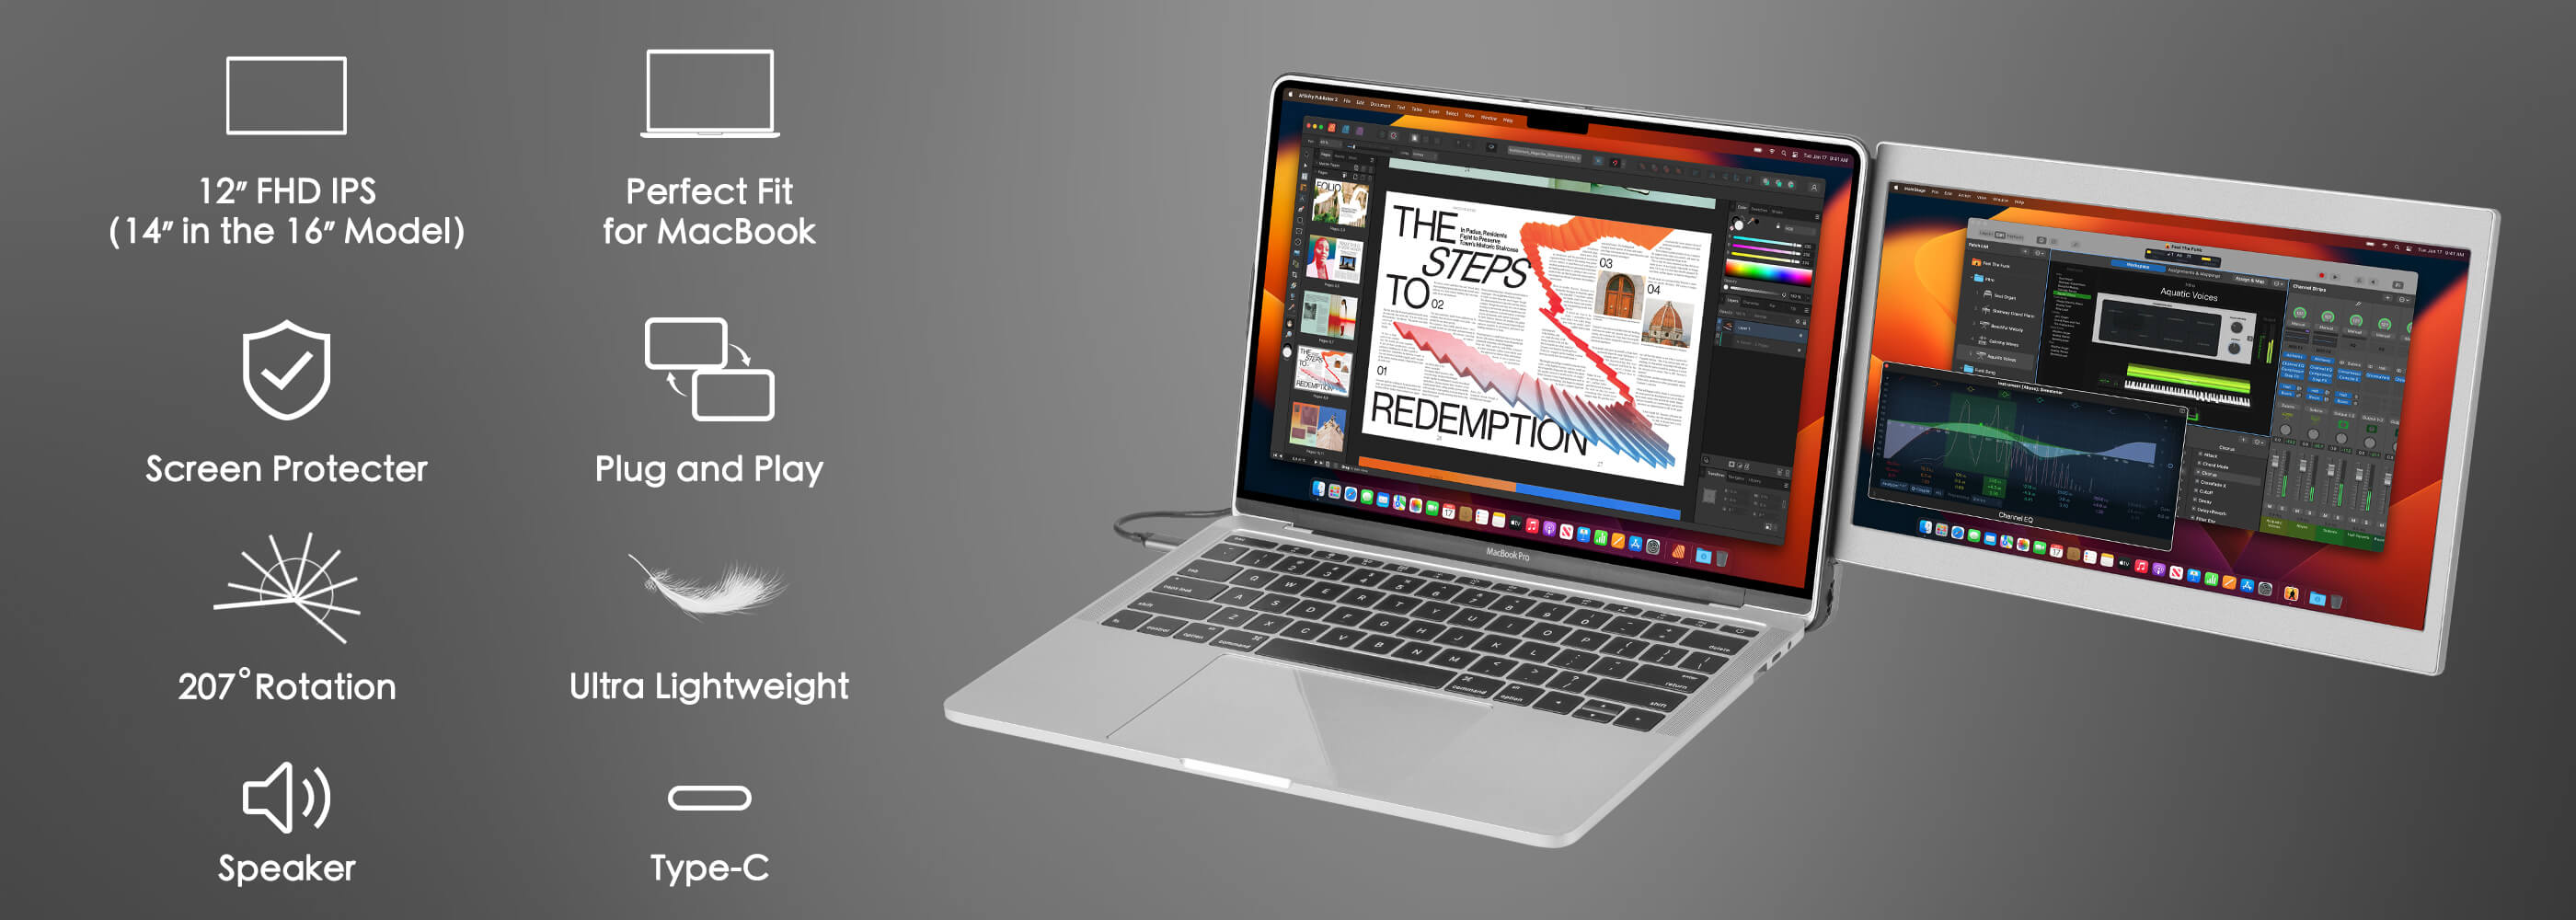 CopGain MacBook Portable Monitor Features